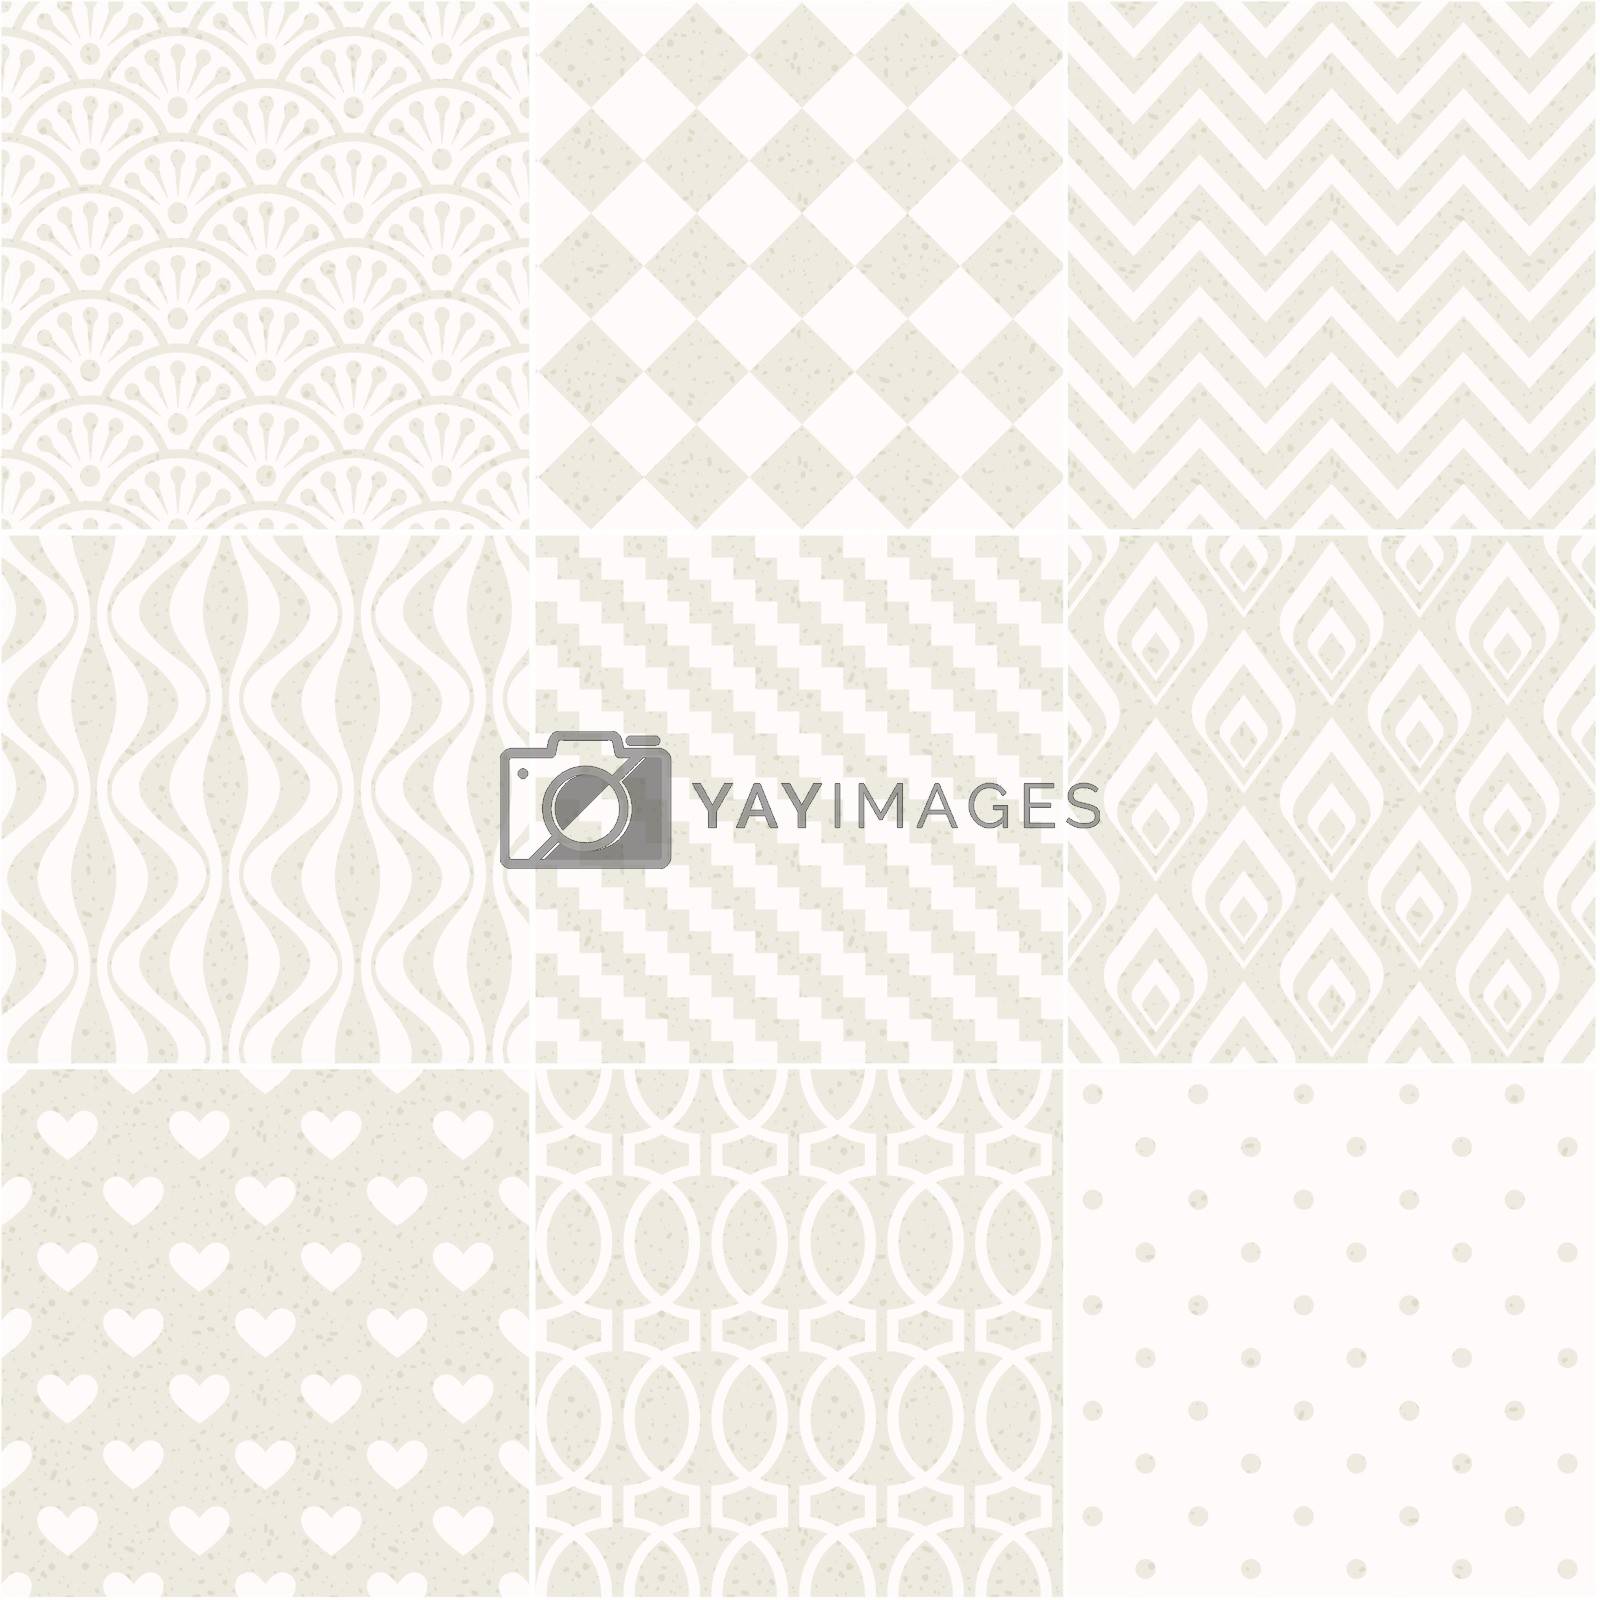 Royalty free image of seamless geometric pattern grain paper texture by pauljune